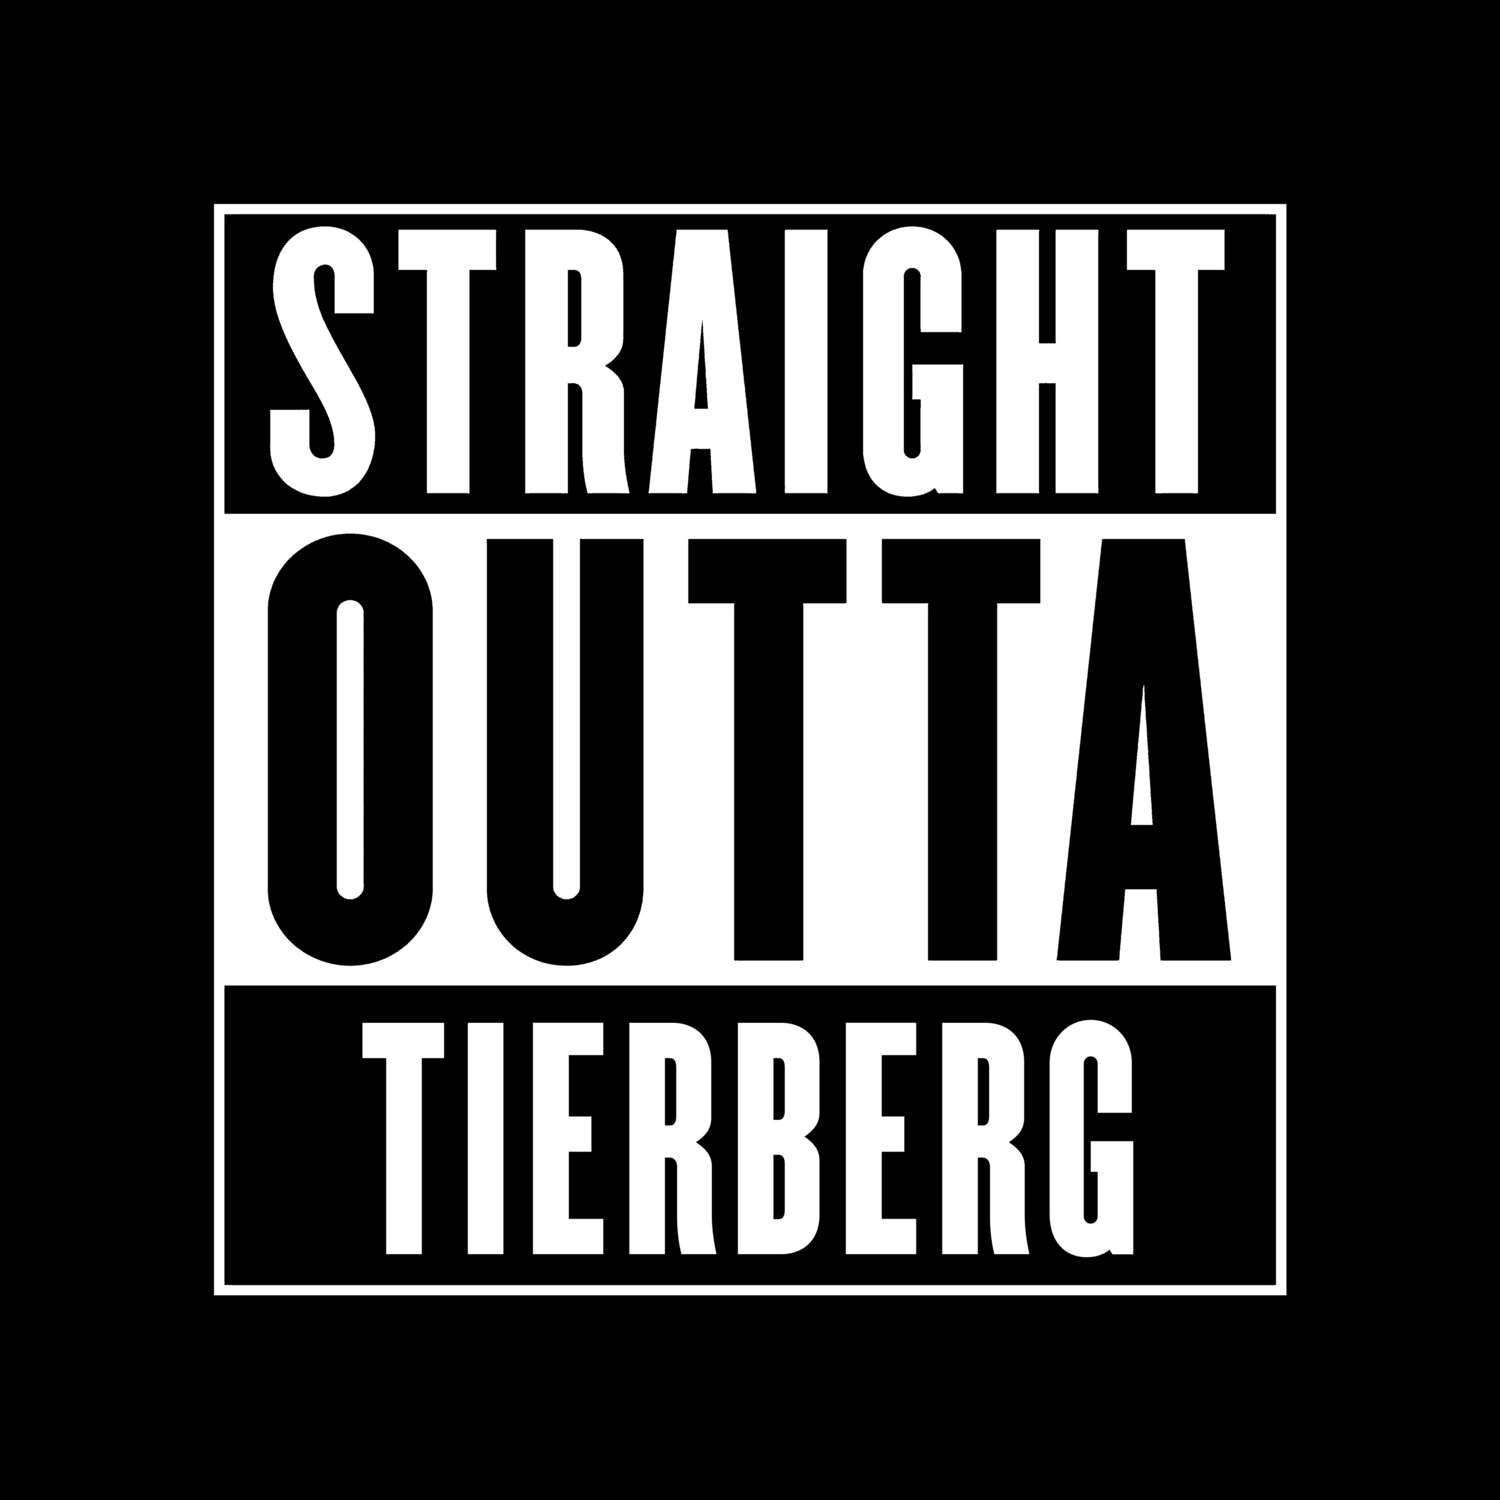 Tierberg T-Shirt »Straight Outta«